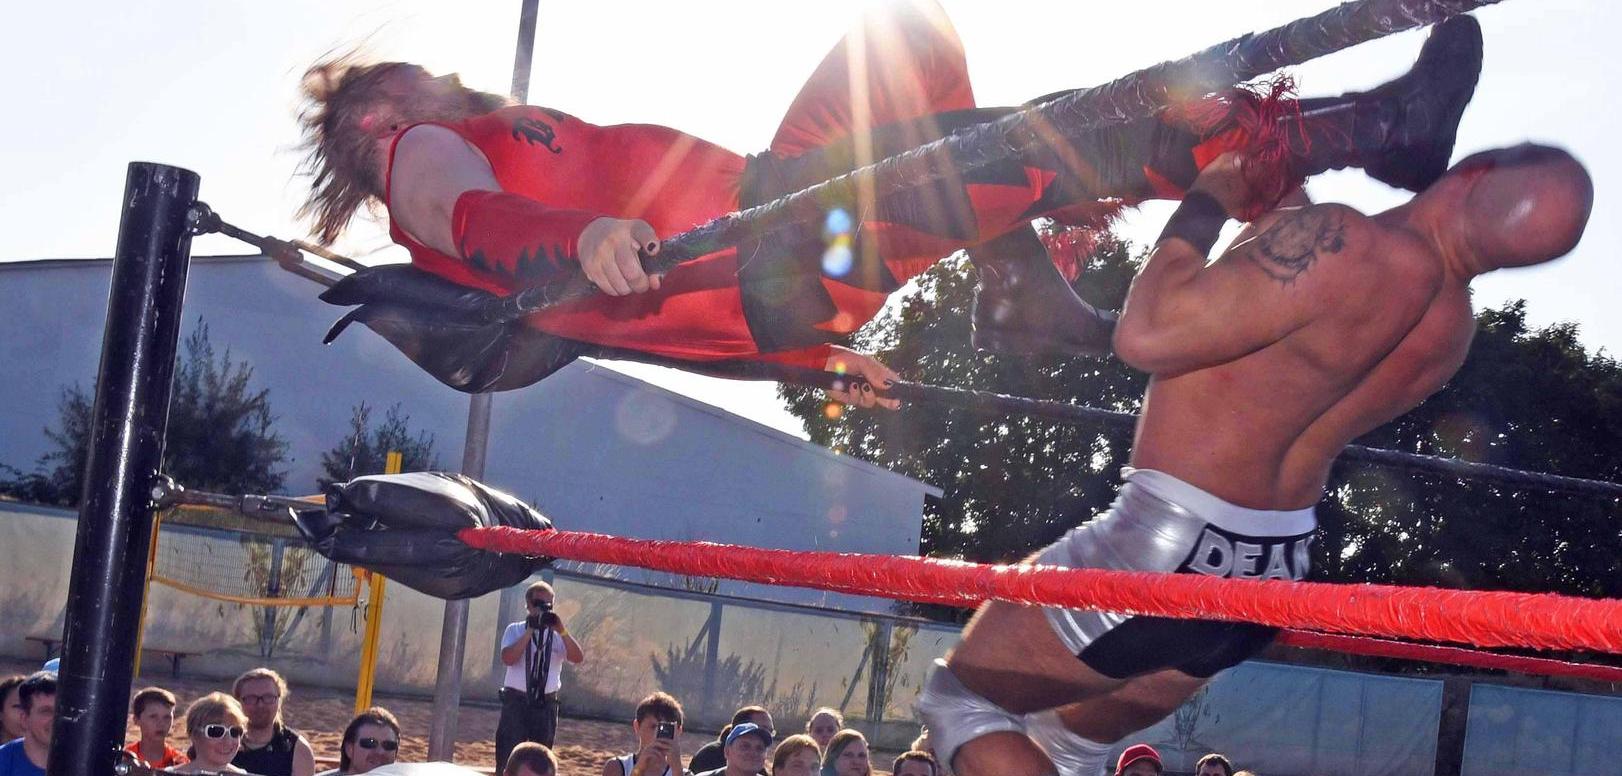 Wrestling-Stars kämpften unter freiem Himmel